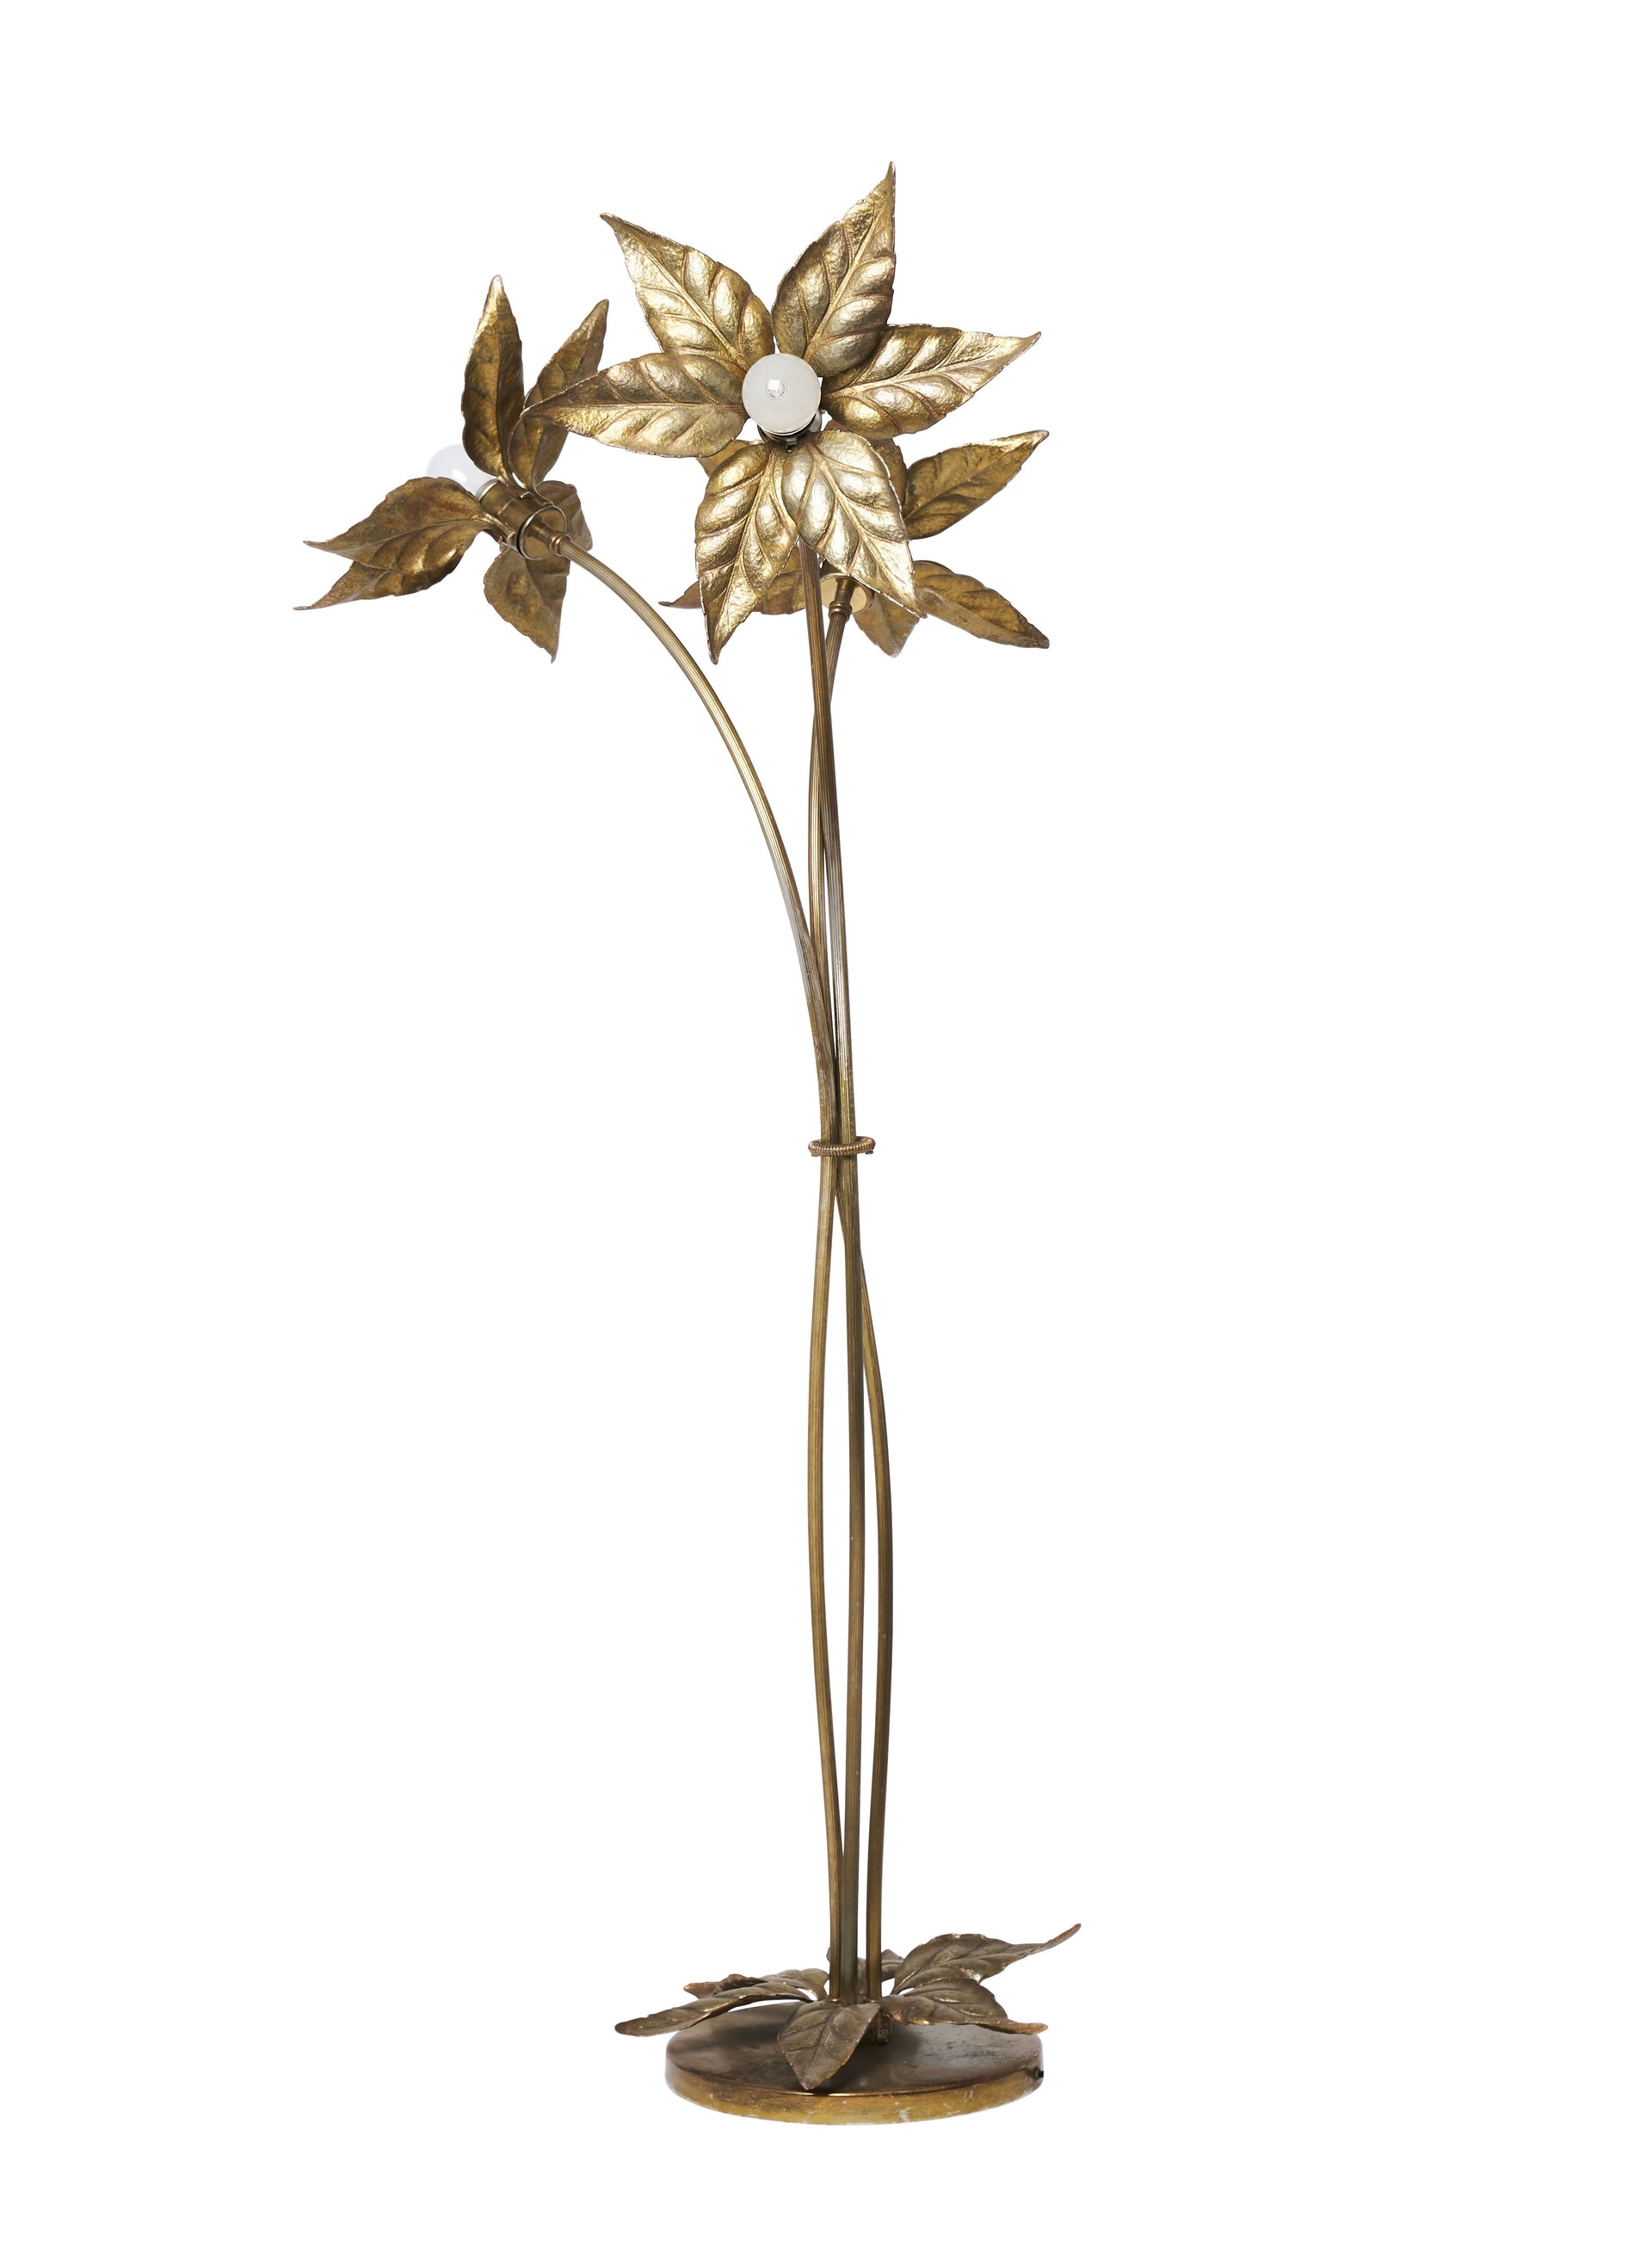 SOLD An unusual gilt metal three flower-head form floor lamp, Italian circa 1970